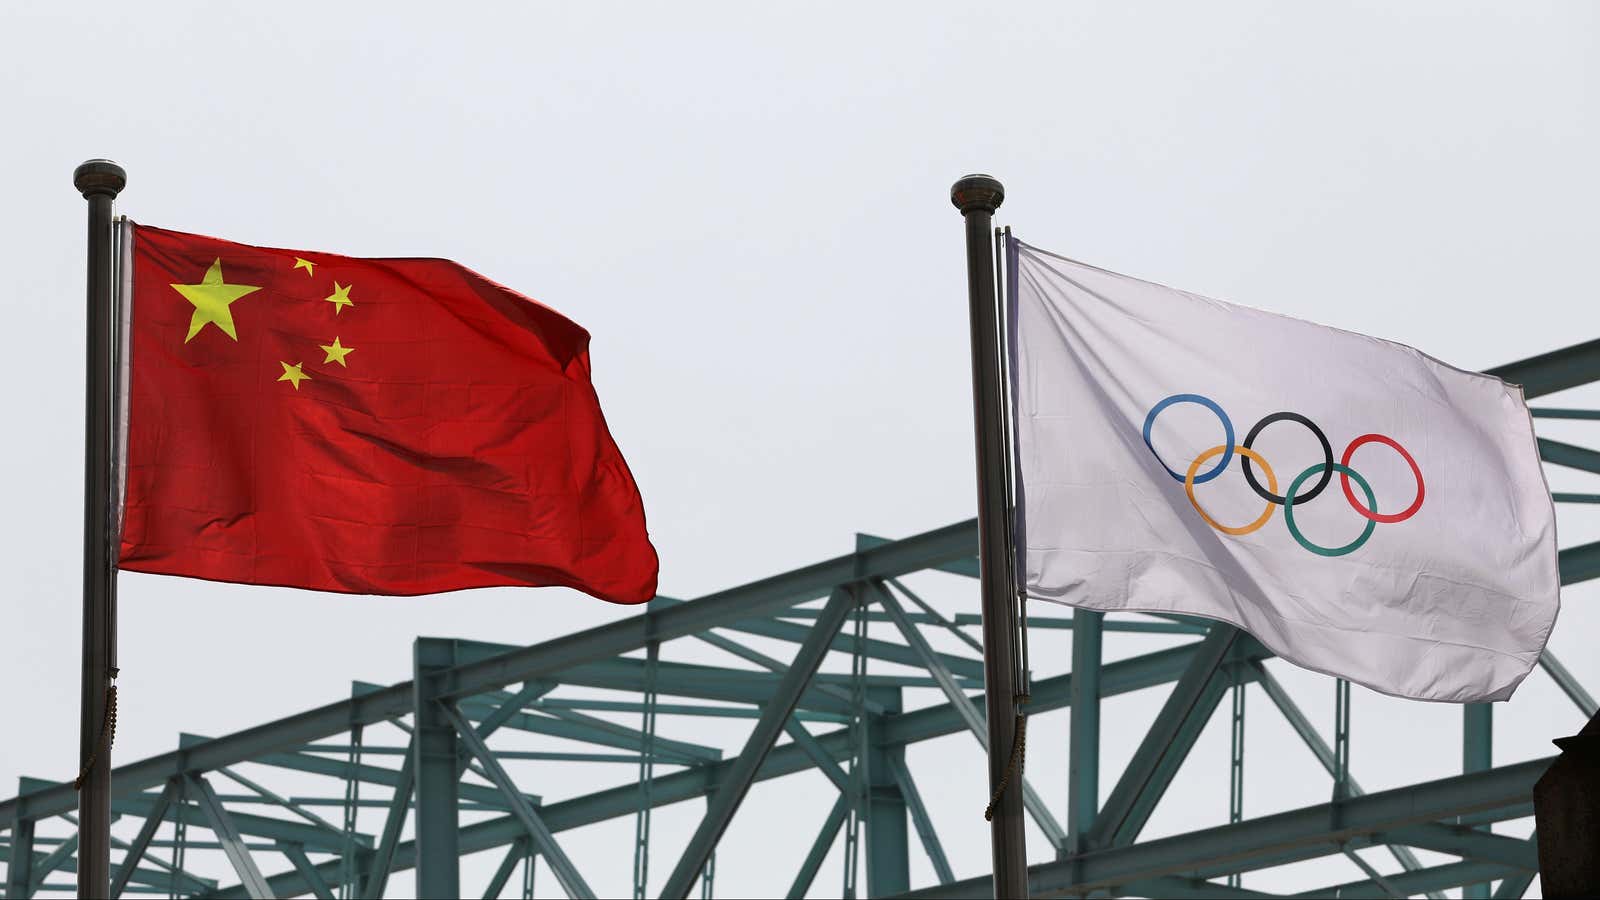 Should countries boycott the 2022 Beijing Winter Olympics?